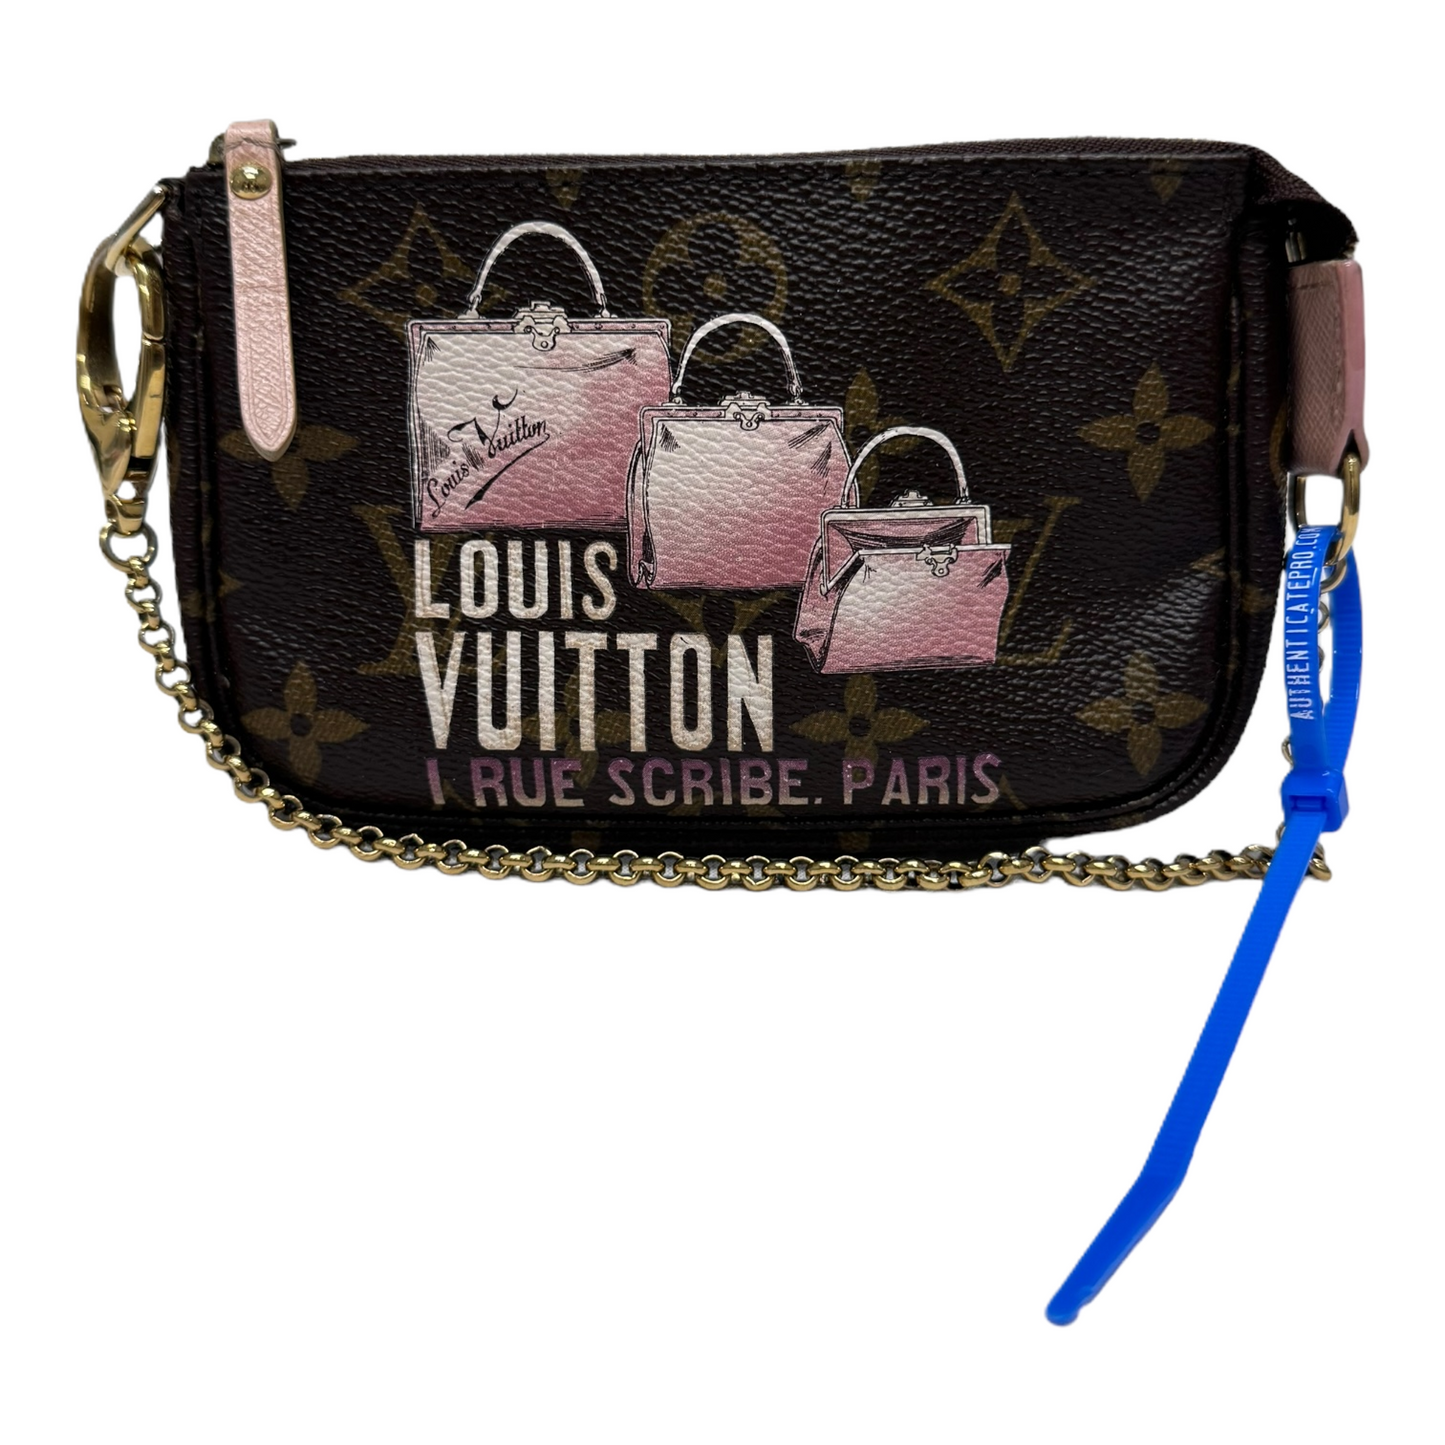 Handbag Luxury Designer By Louis Vuitton, Size: Small